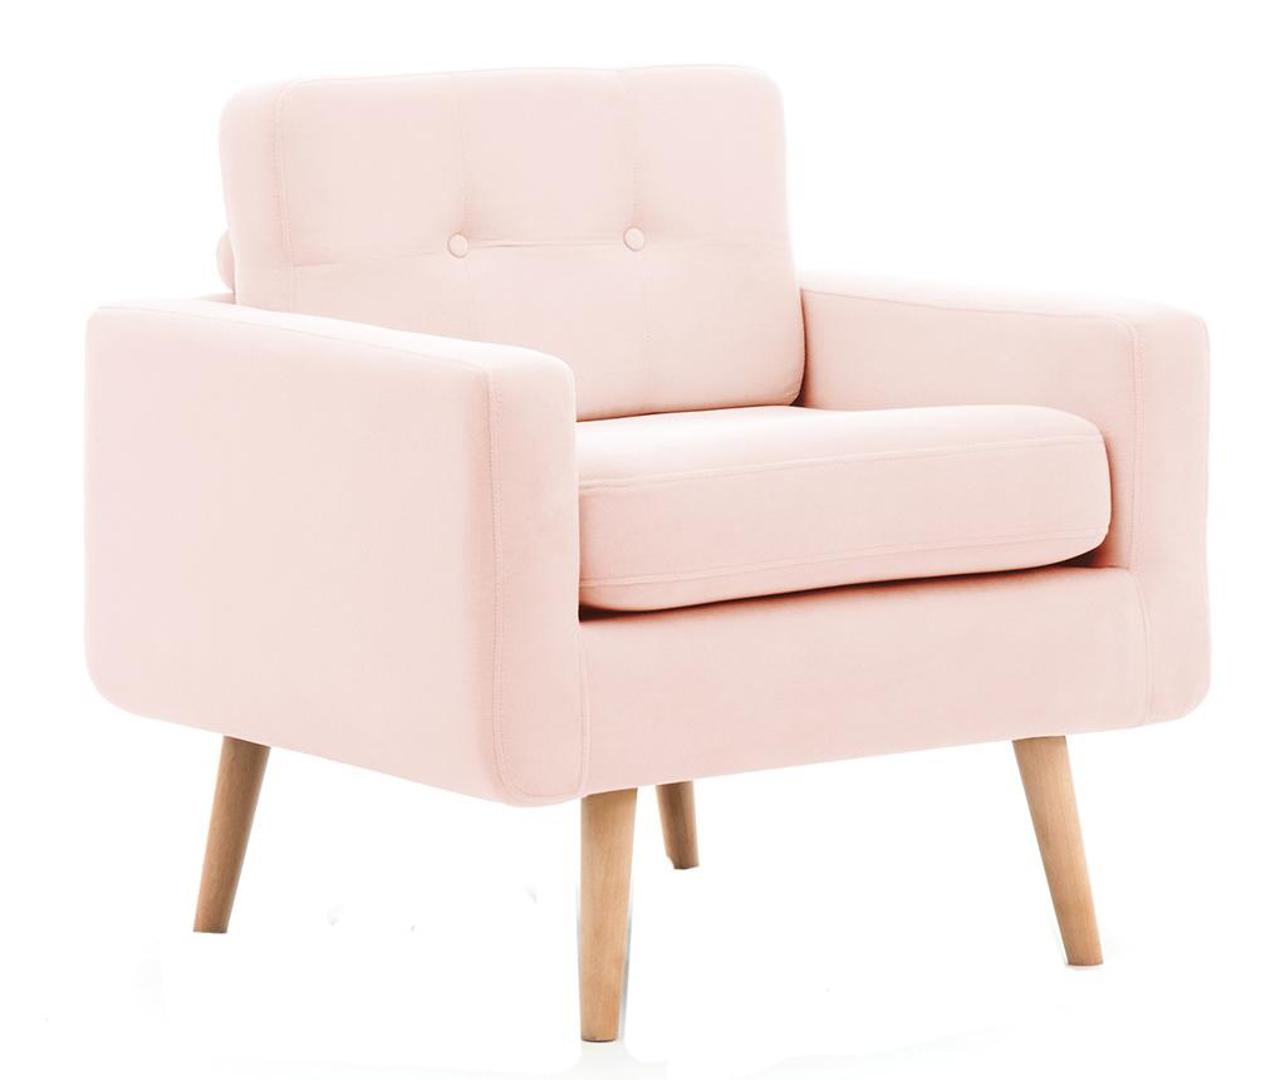 Nježno ružičasta fotelja odličan je detalj u dnevnom boravku (Vivre.hr, 1917 kn)